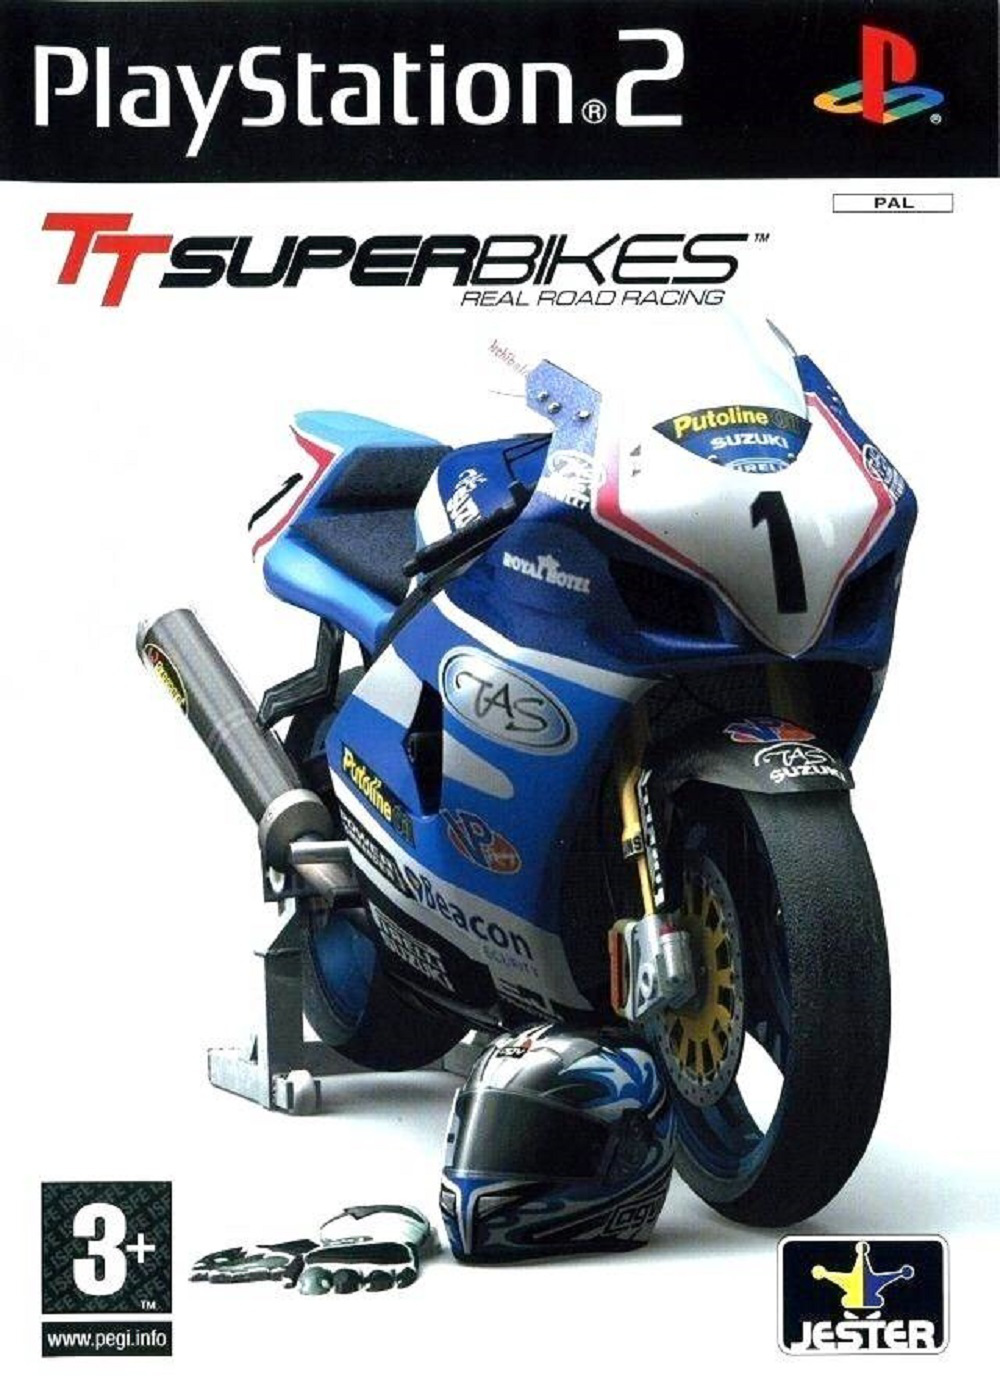 TT Superbikes Real Road Racing - PlayStation 2 Játékok